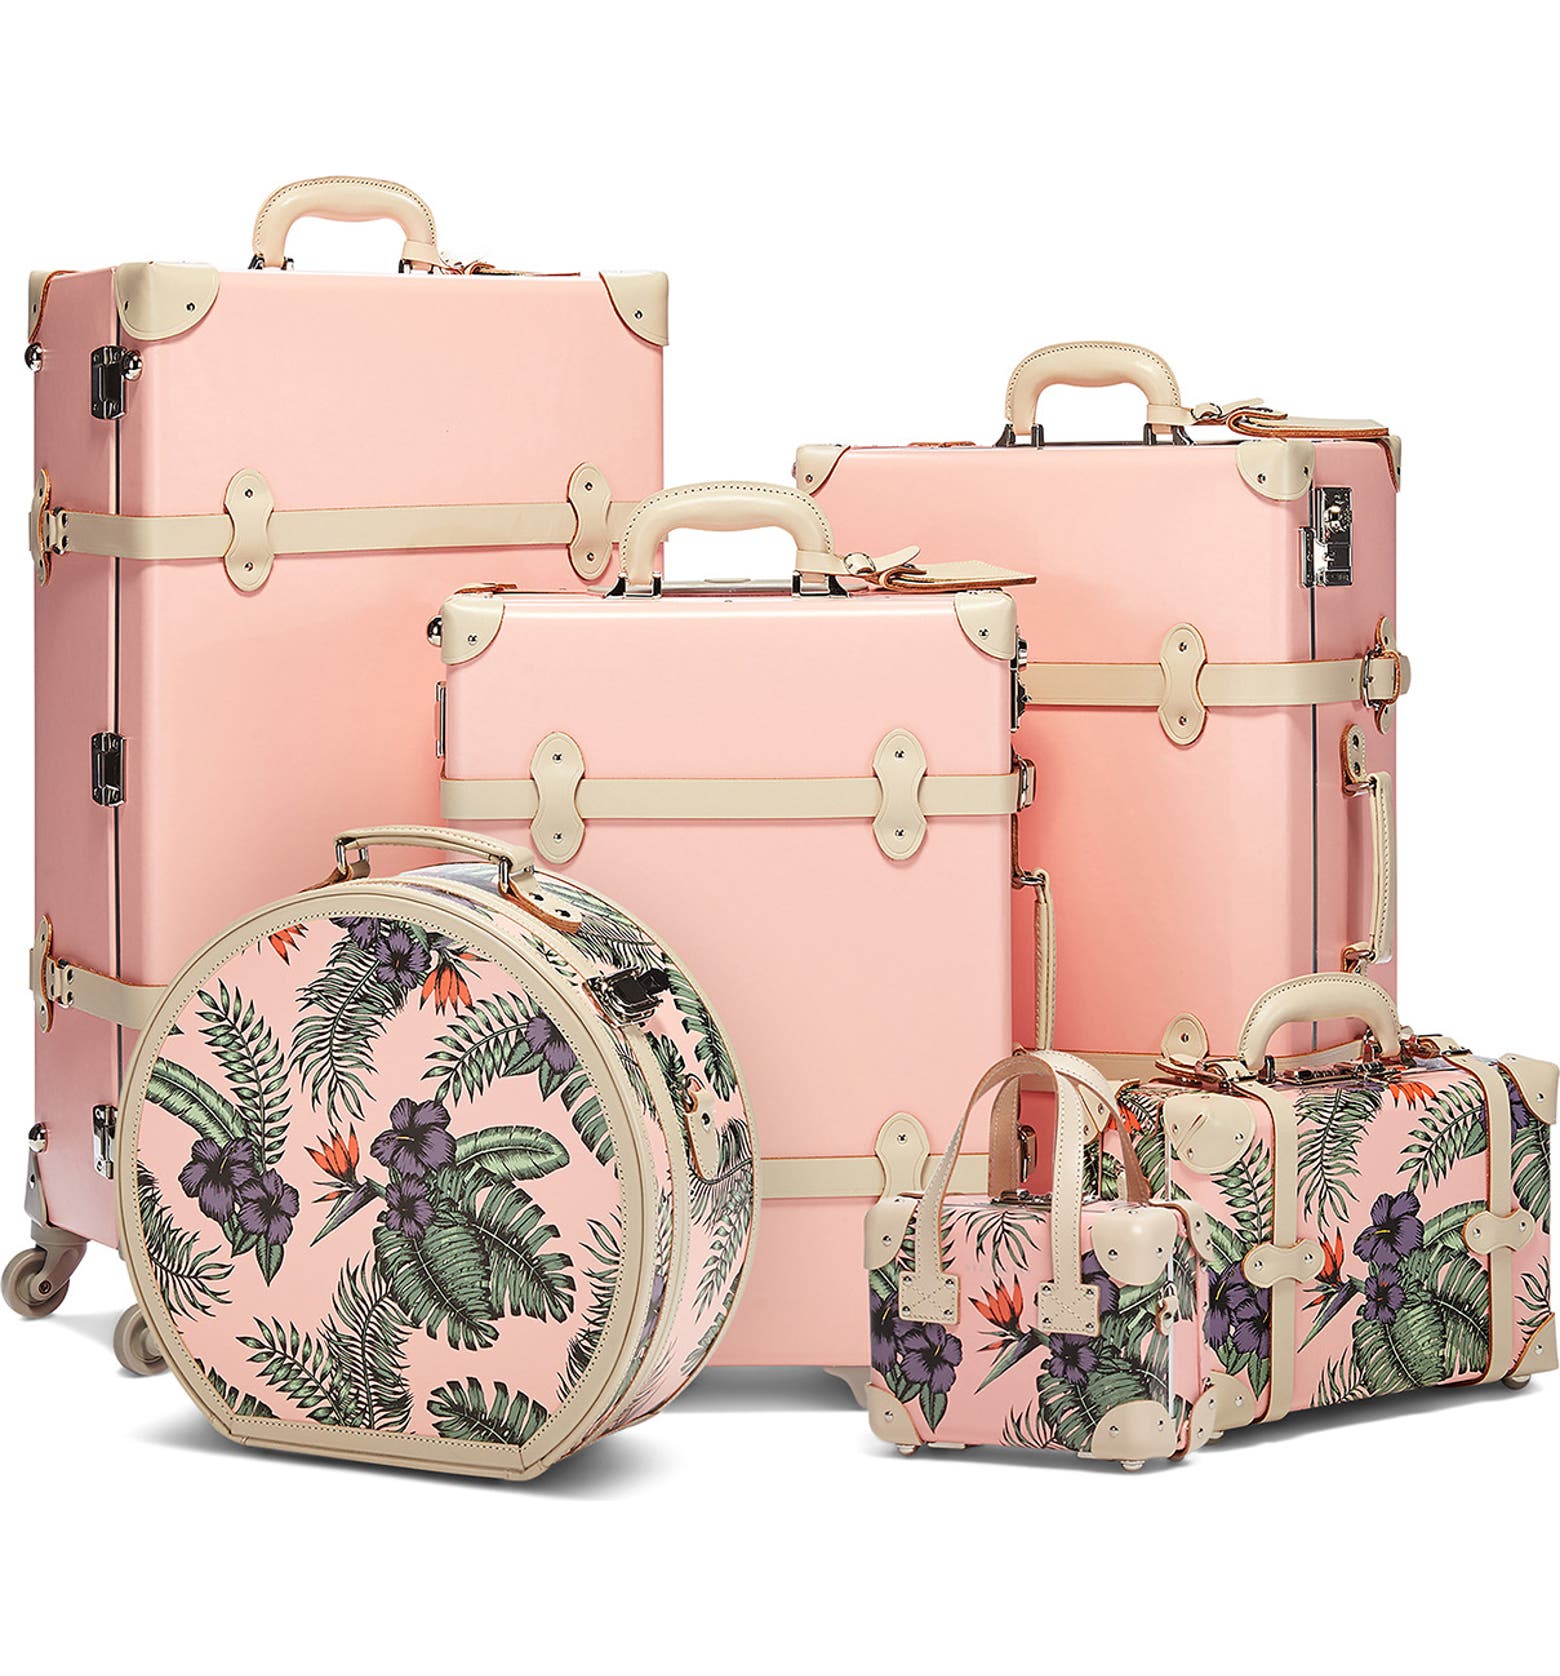 Steamline luggage, Nordstrom, travel, fashion